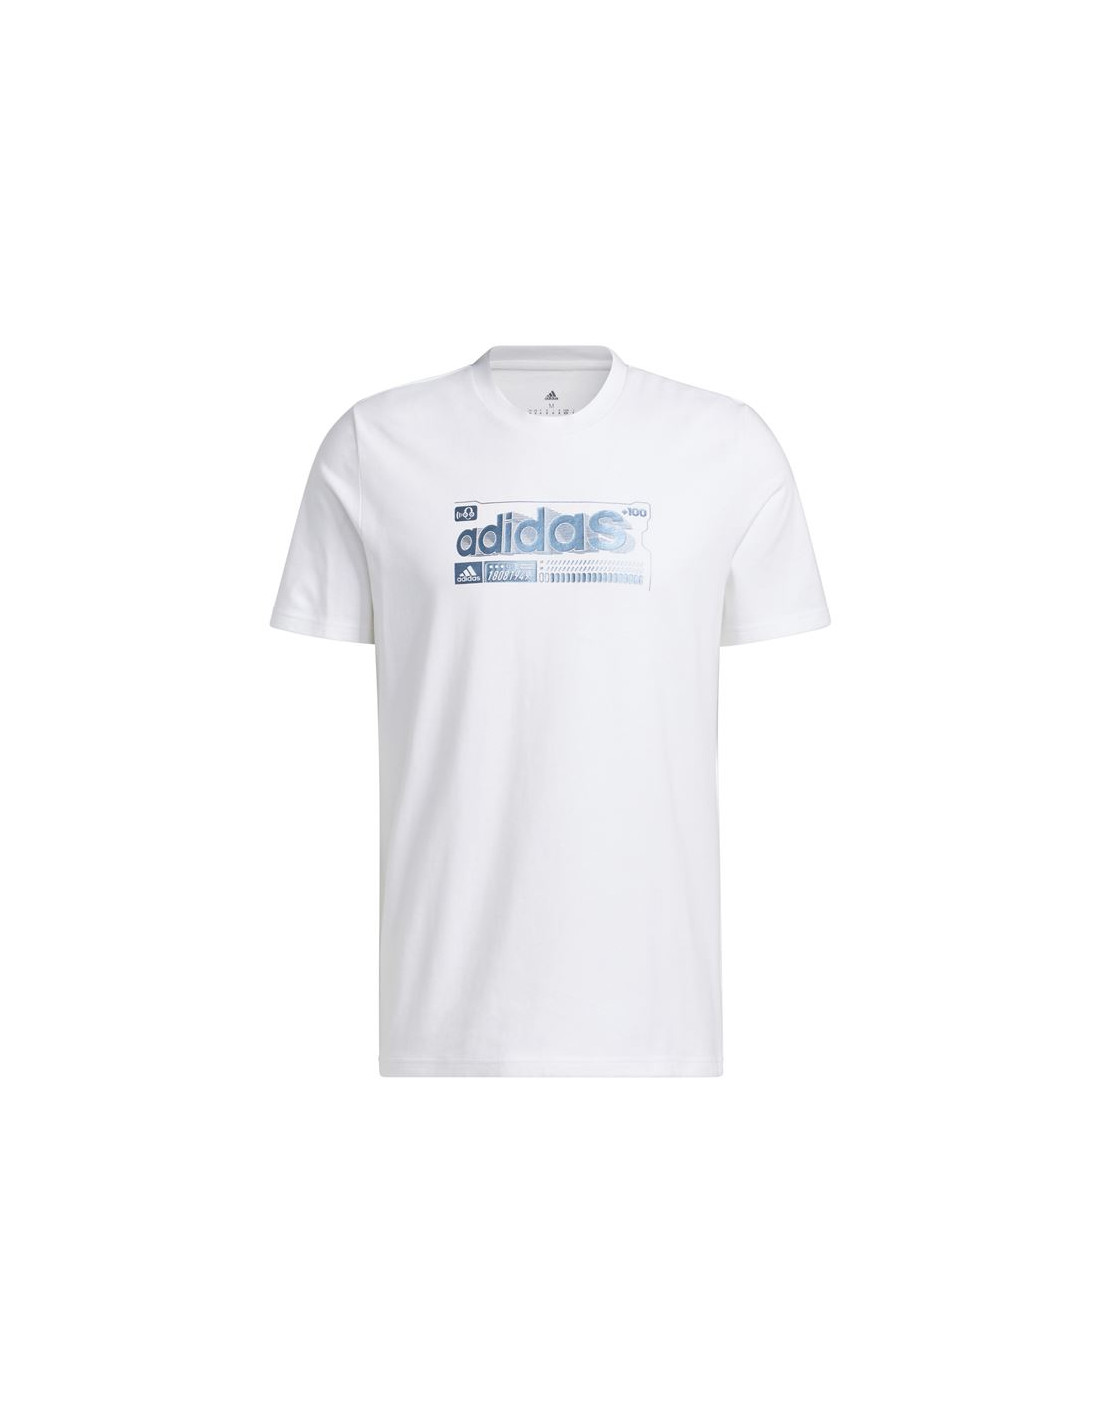 Camiseta adidas colorshift gaming graphic hombre white